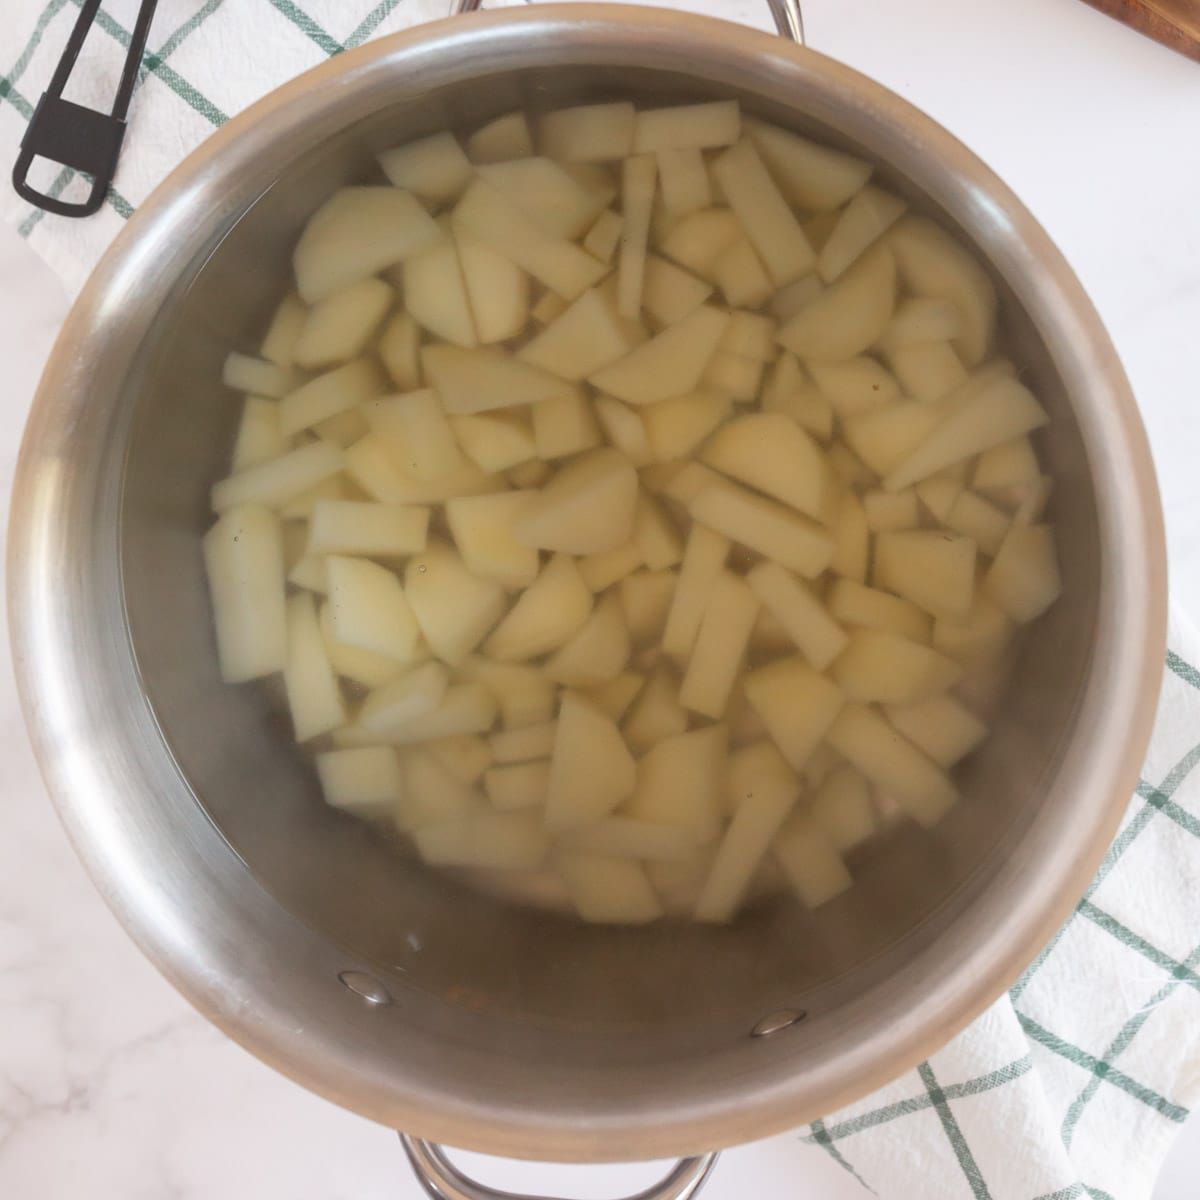 Kovový hrnec s nakrájenými bramborami a vodou